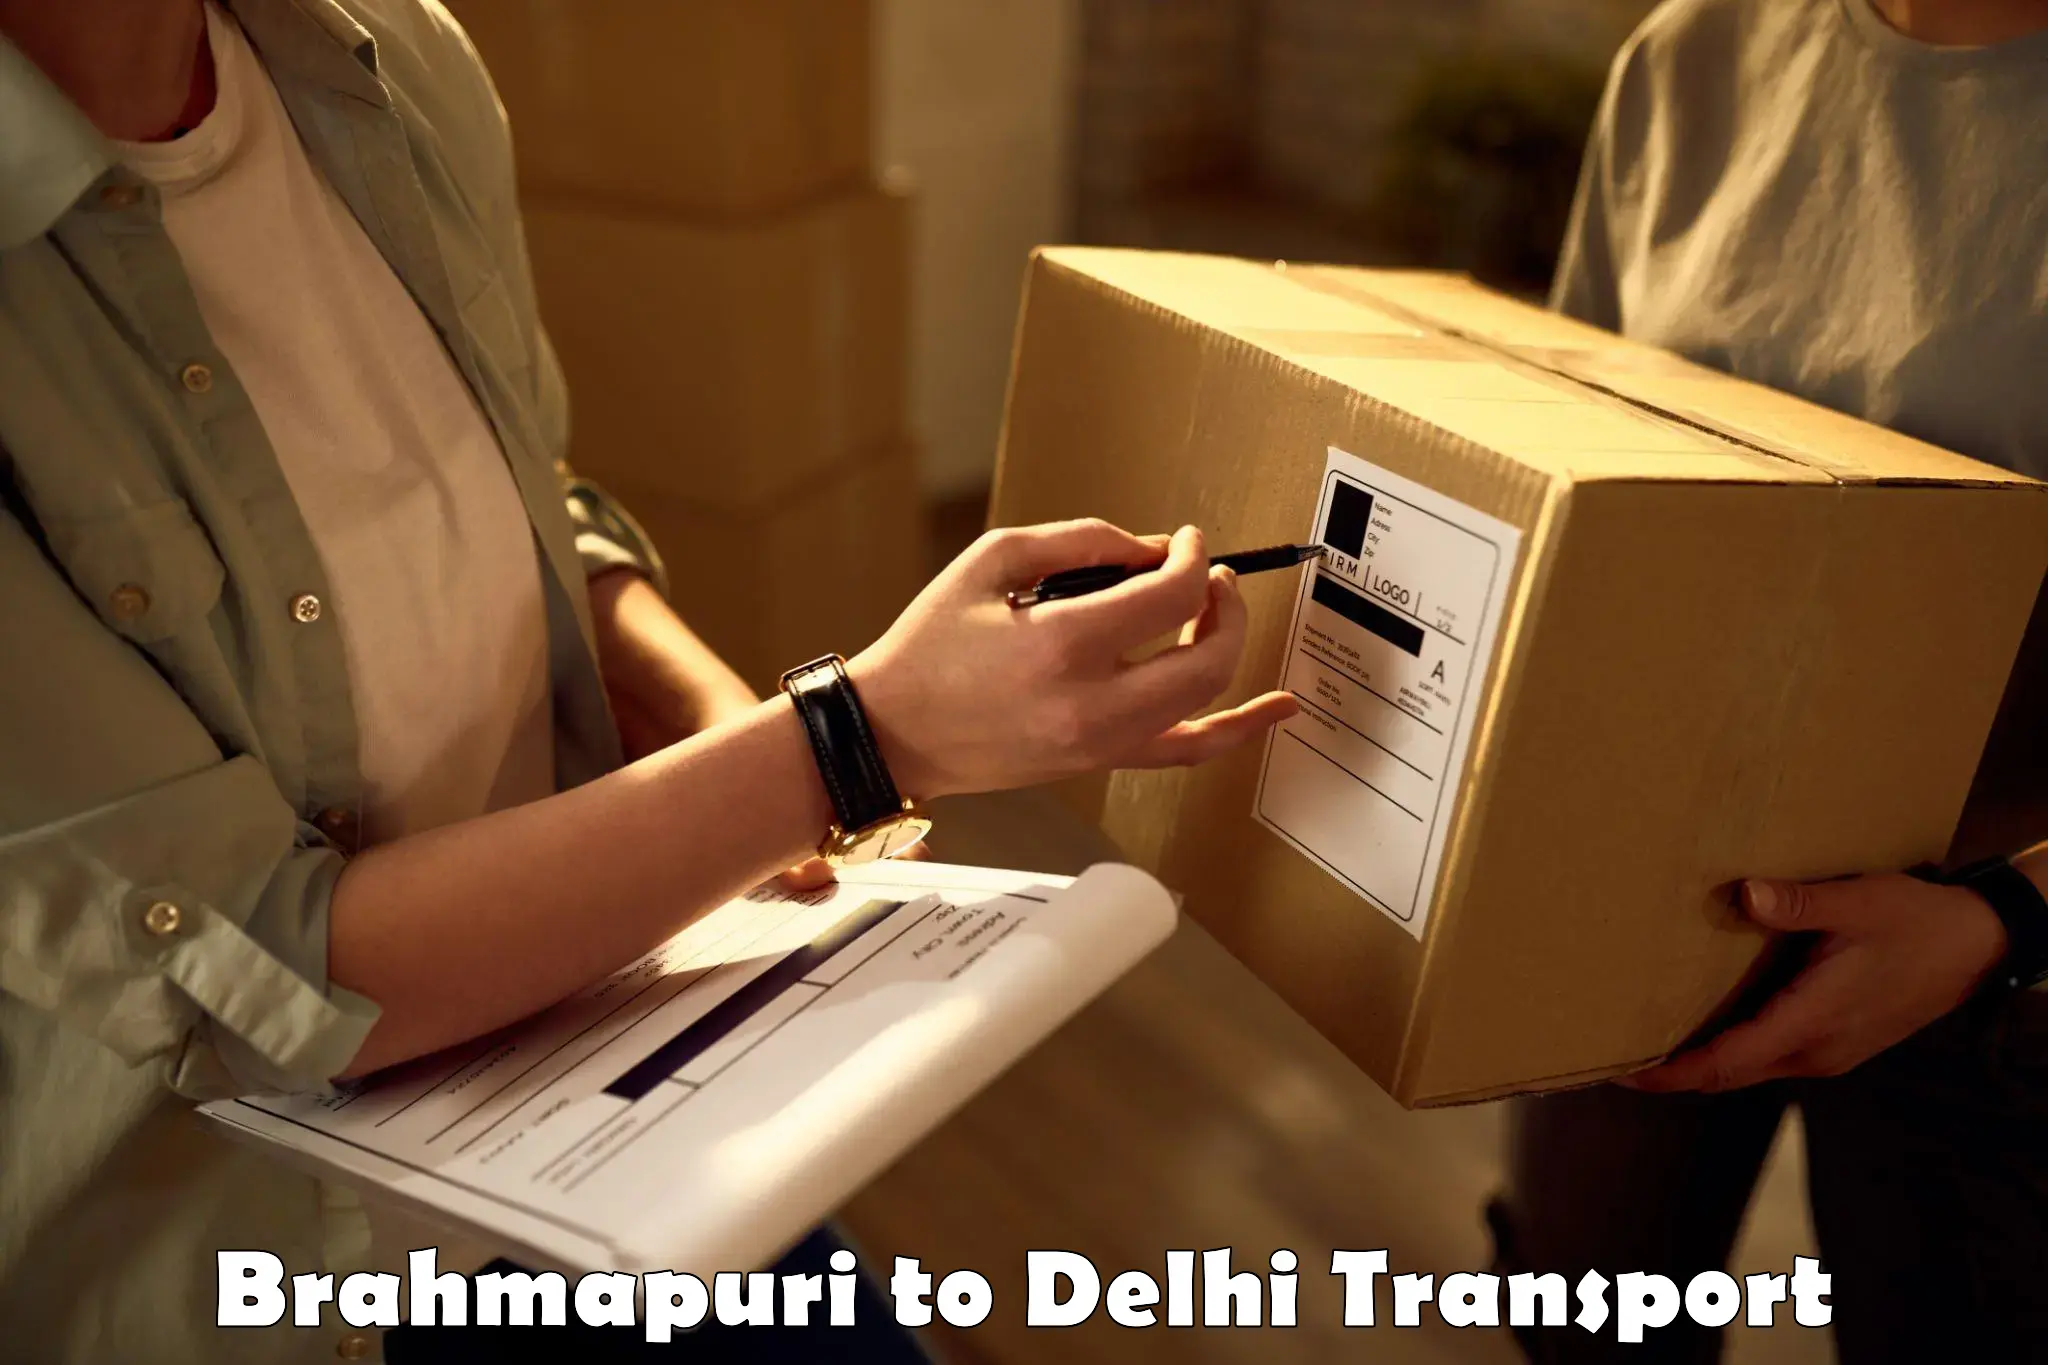 Truck transport companies in India Brahmapuri to Delhi